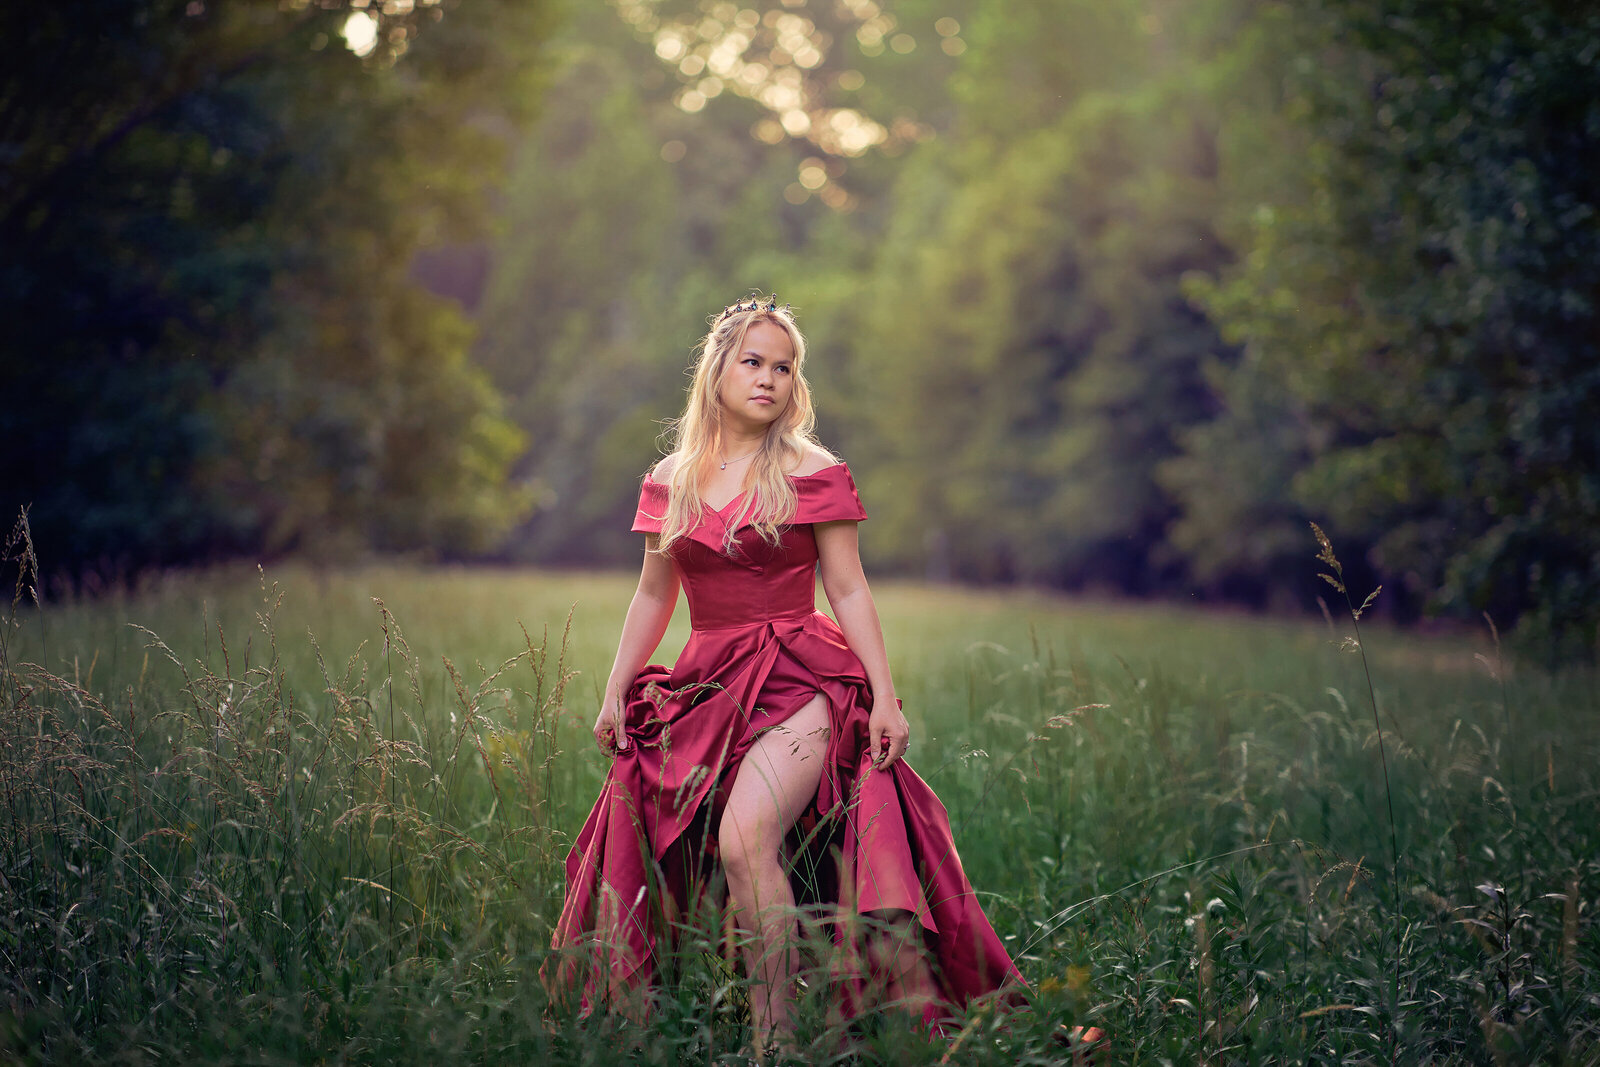 atlanta-best-award-winning-boudoir-women-womens-portrait-evening-gown-red-dress-empowerment-fashion-photography-photographer-twin-rivers-15